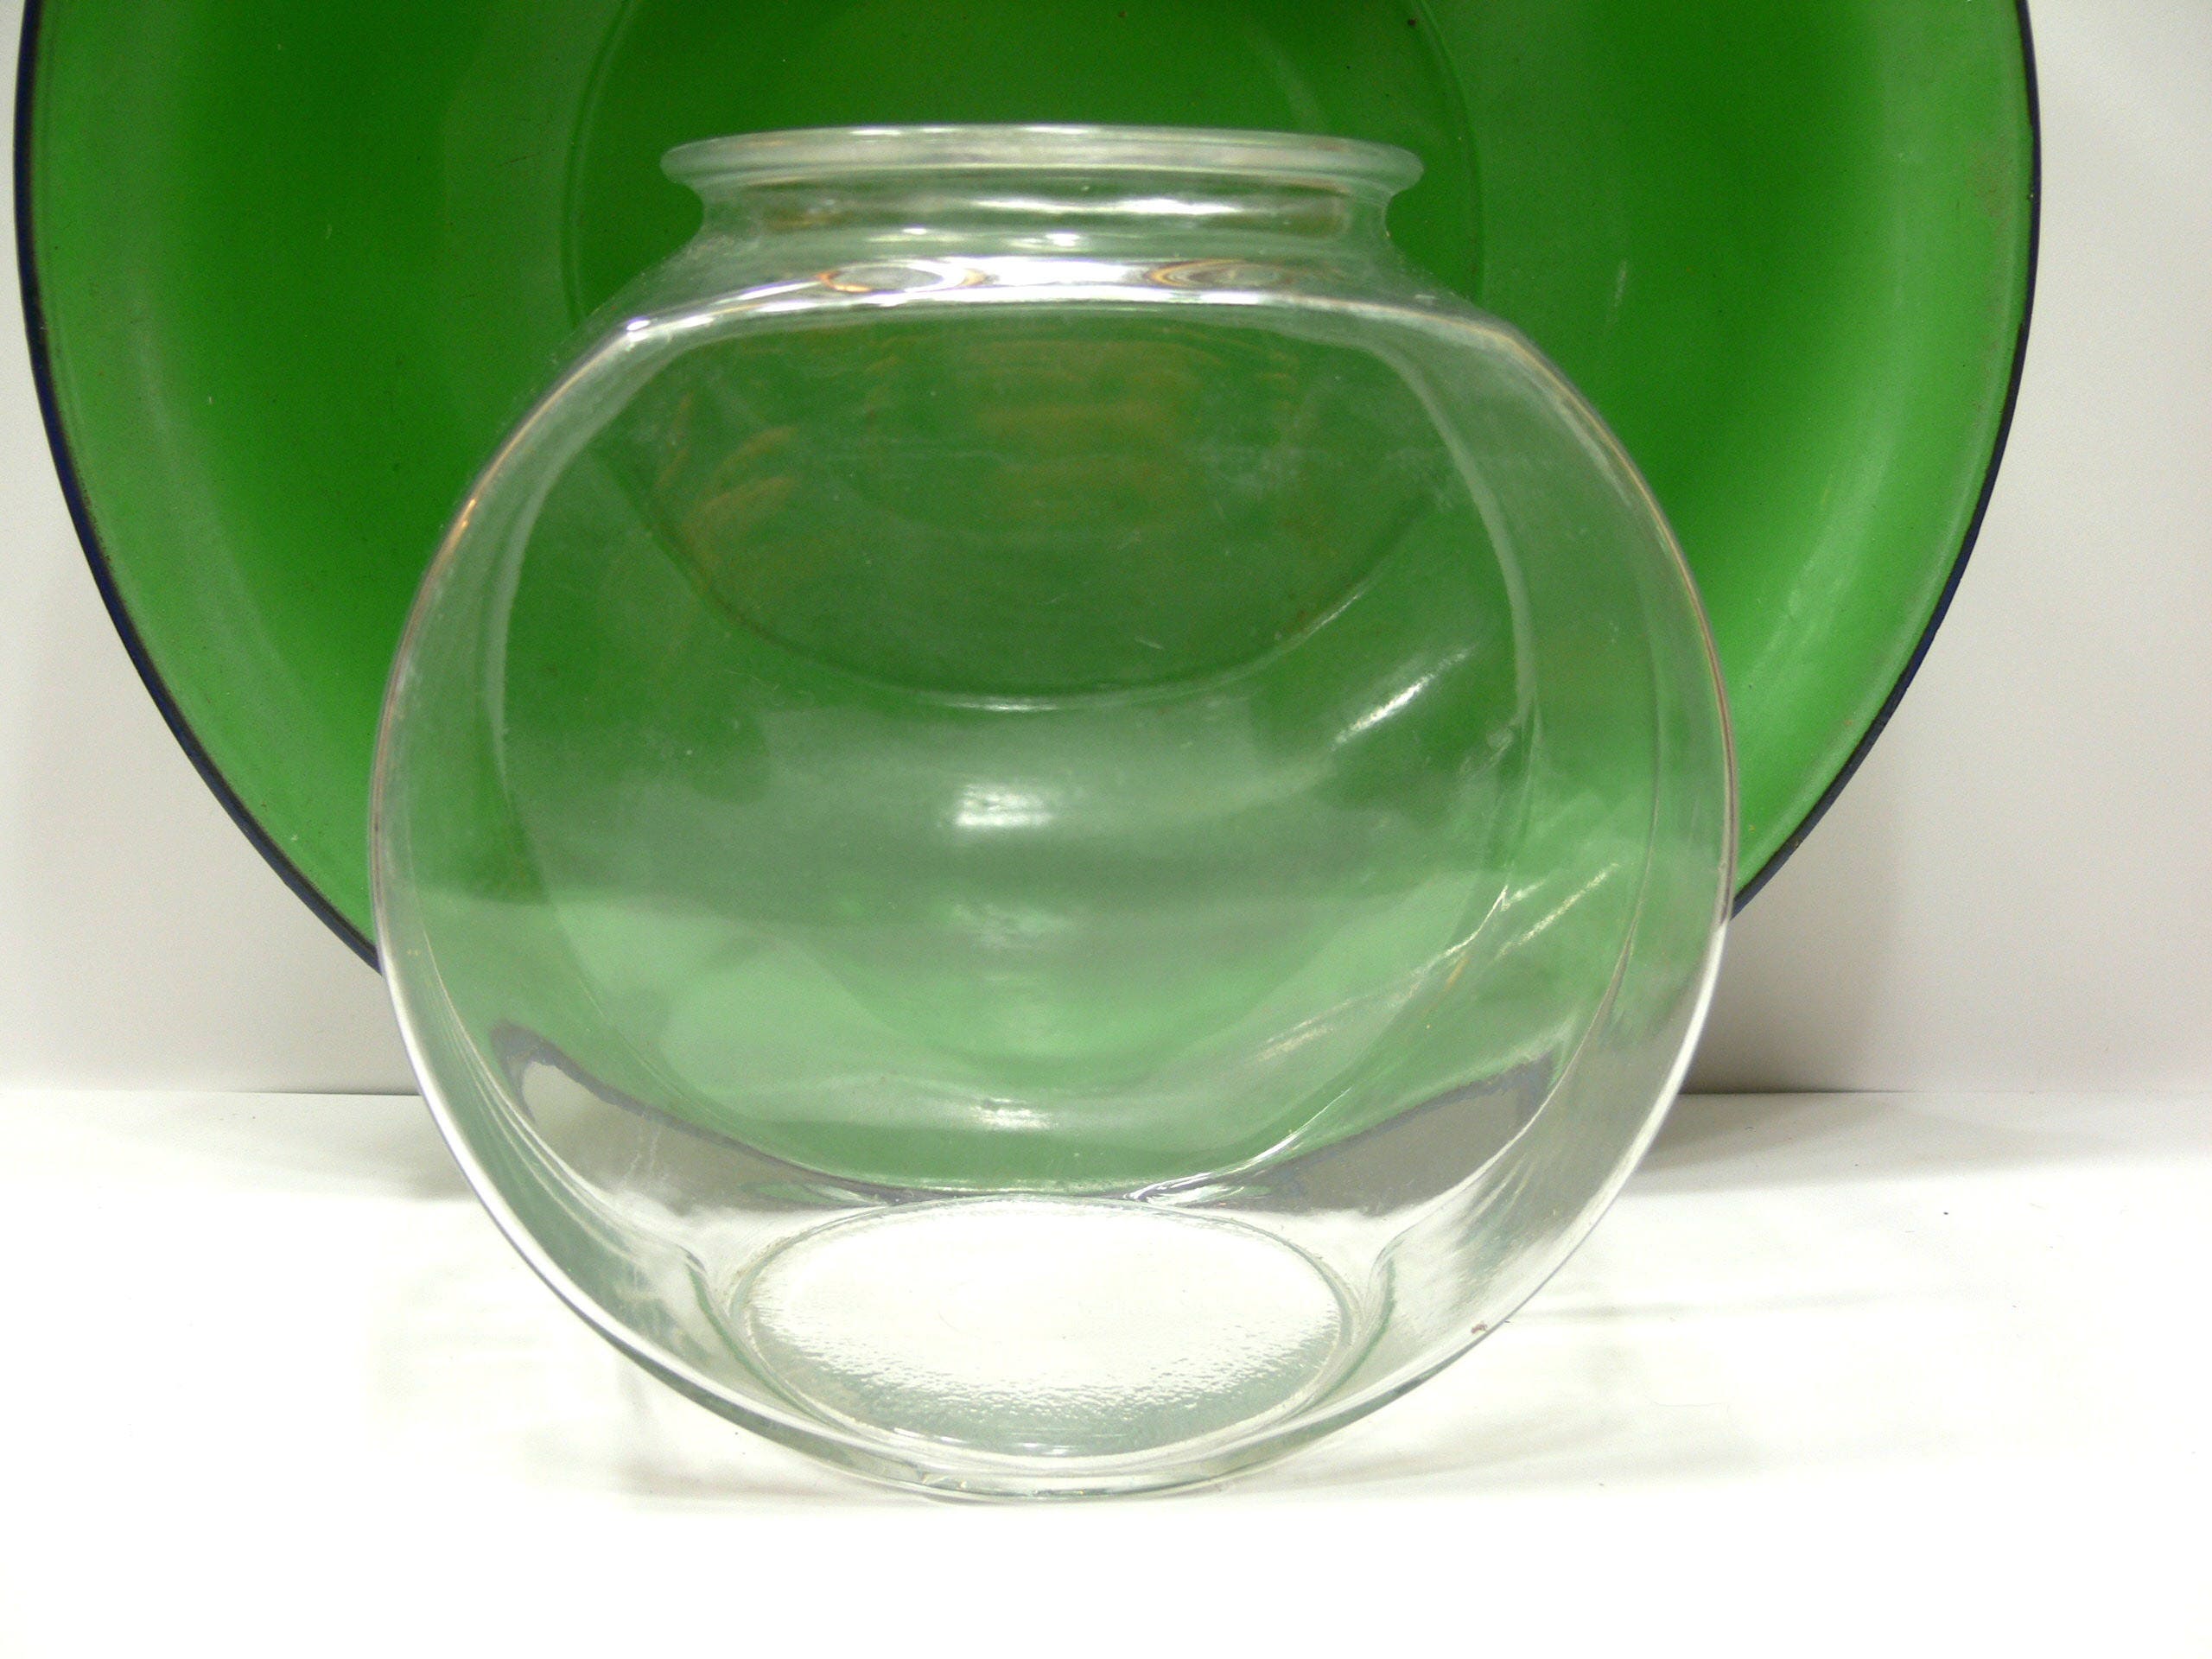 the glassfish bowl